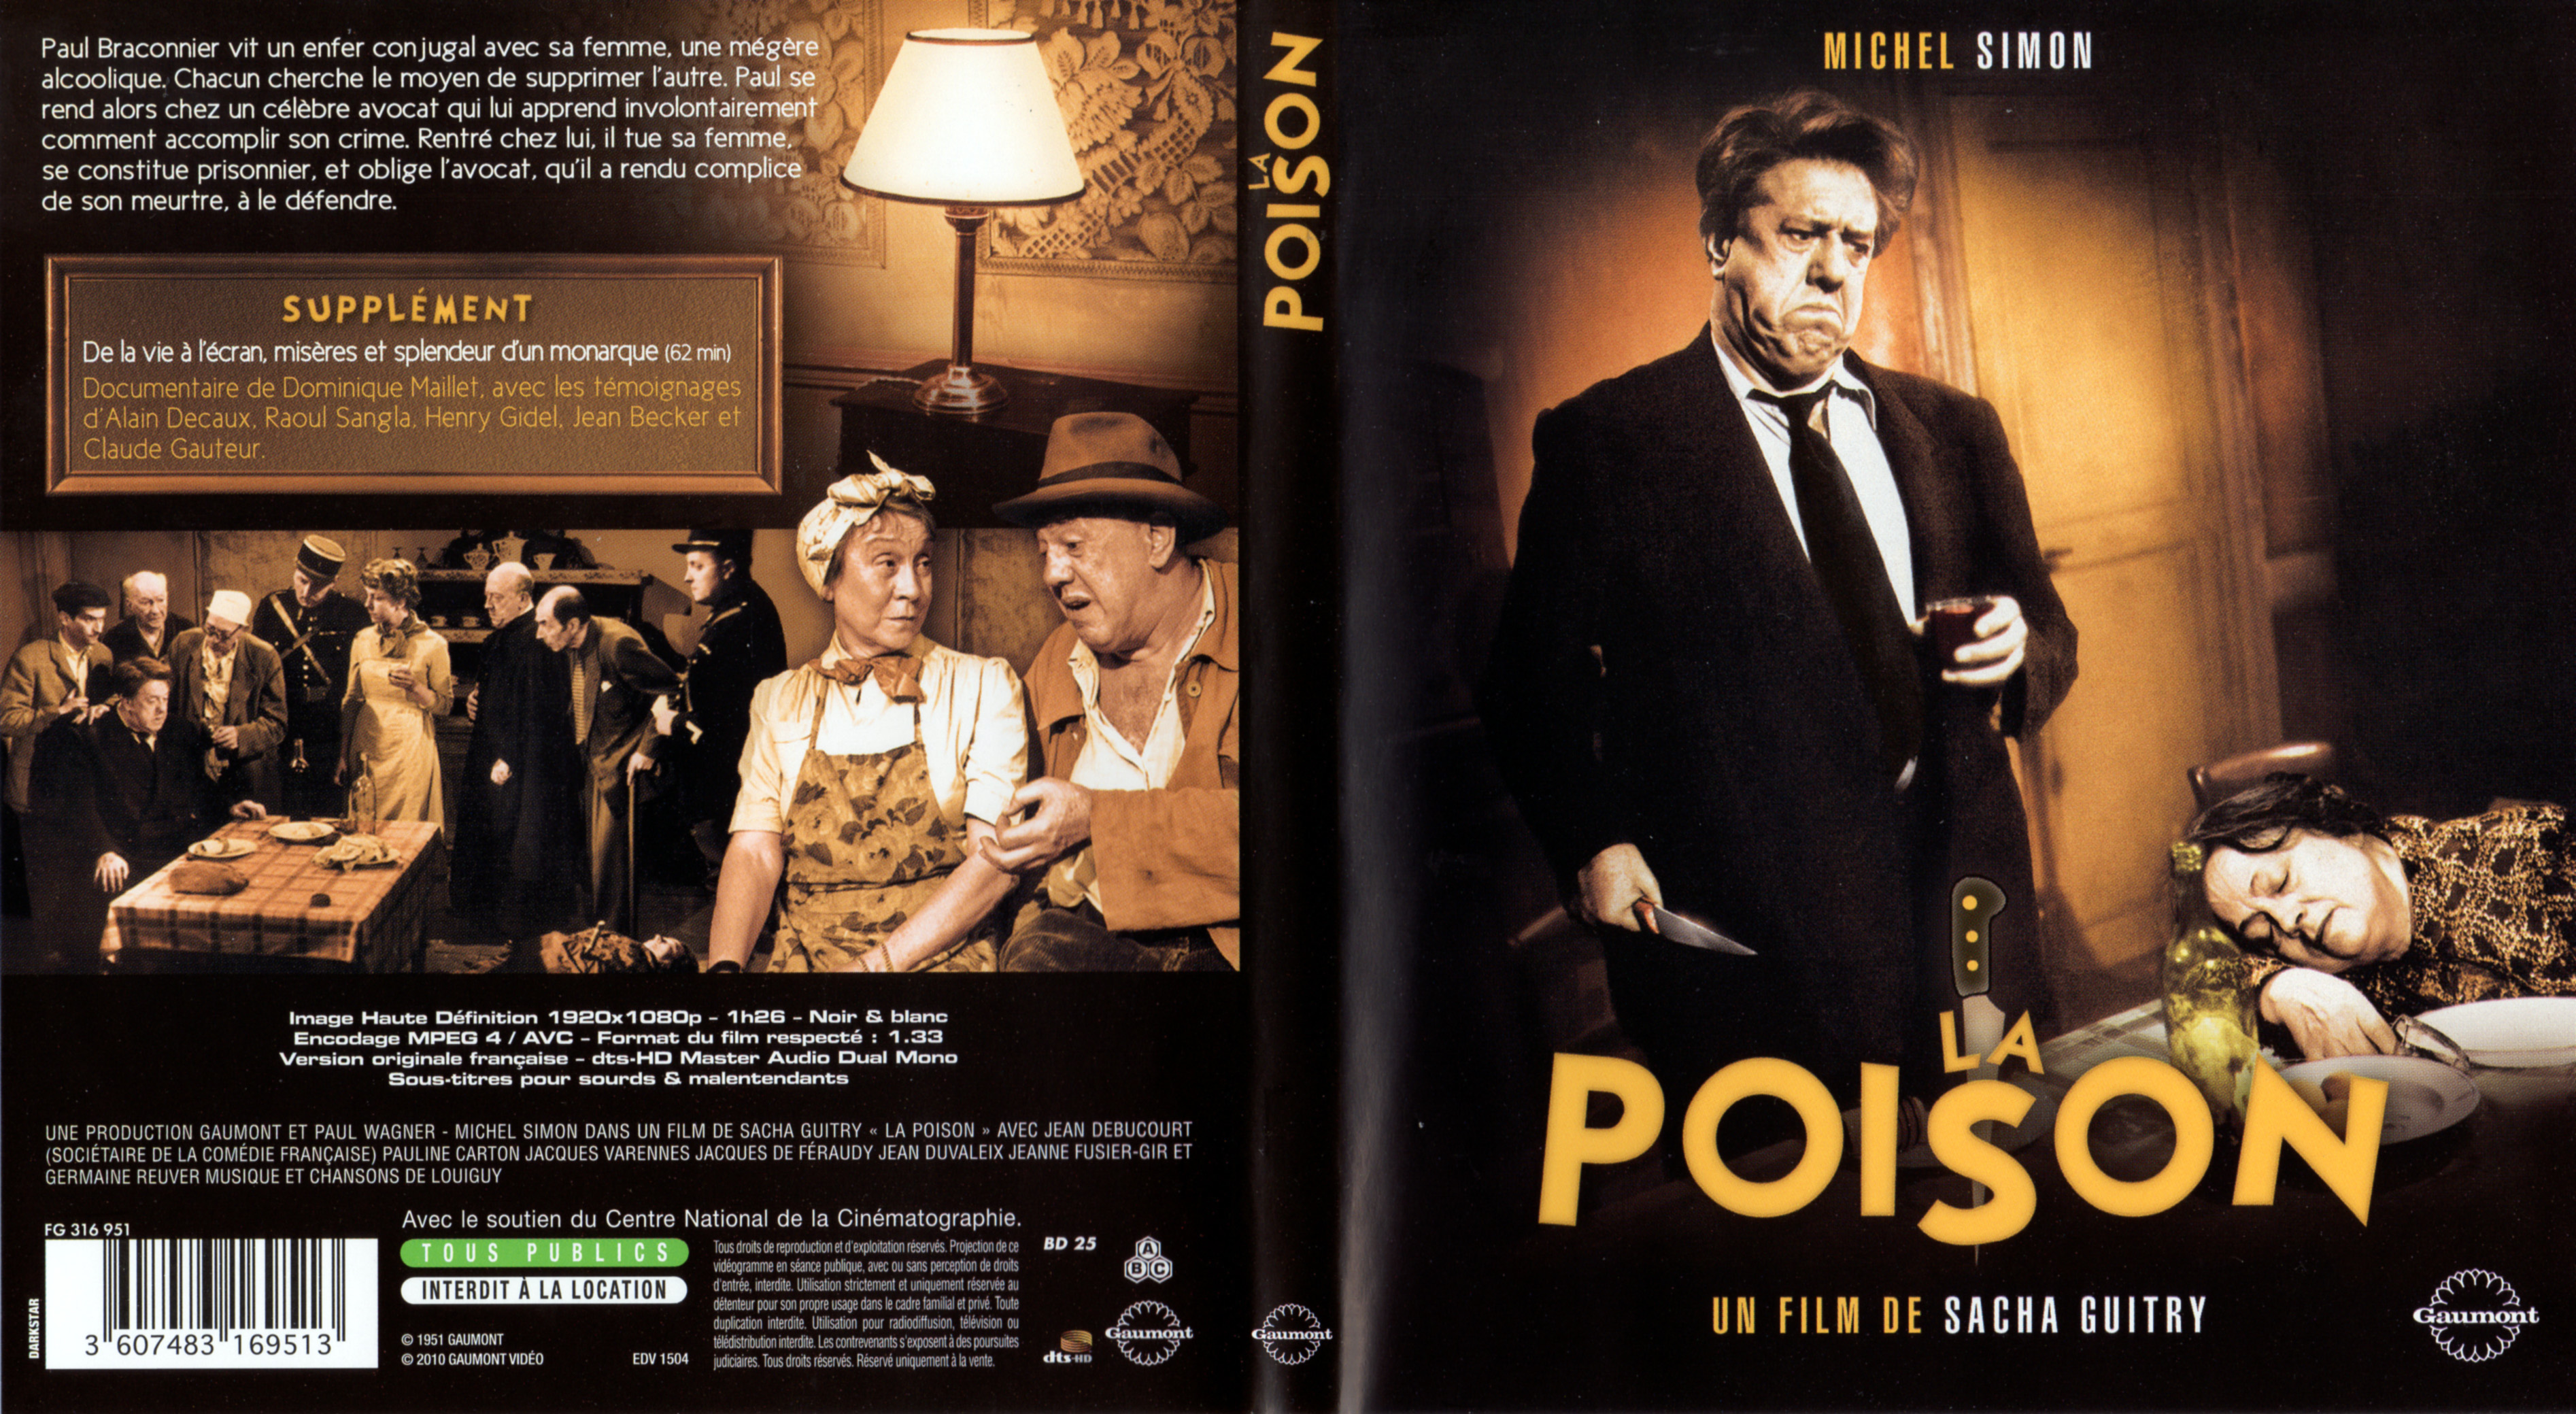 Jaquette DVD La poison (BLU-RAY)